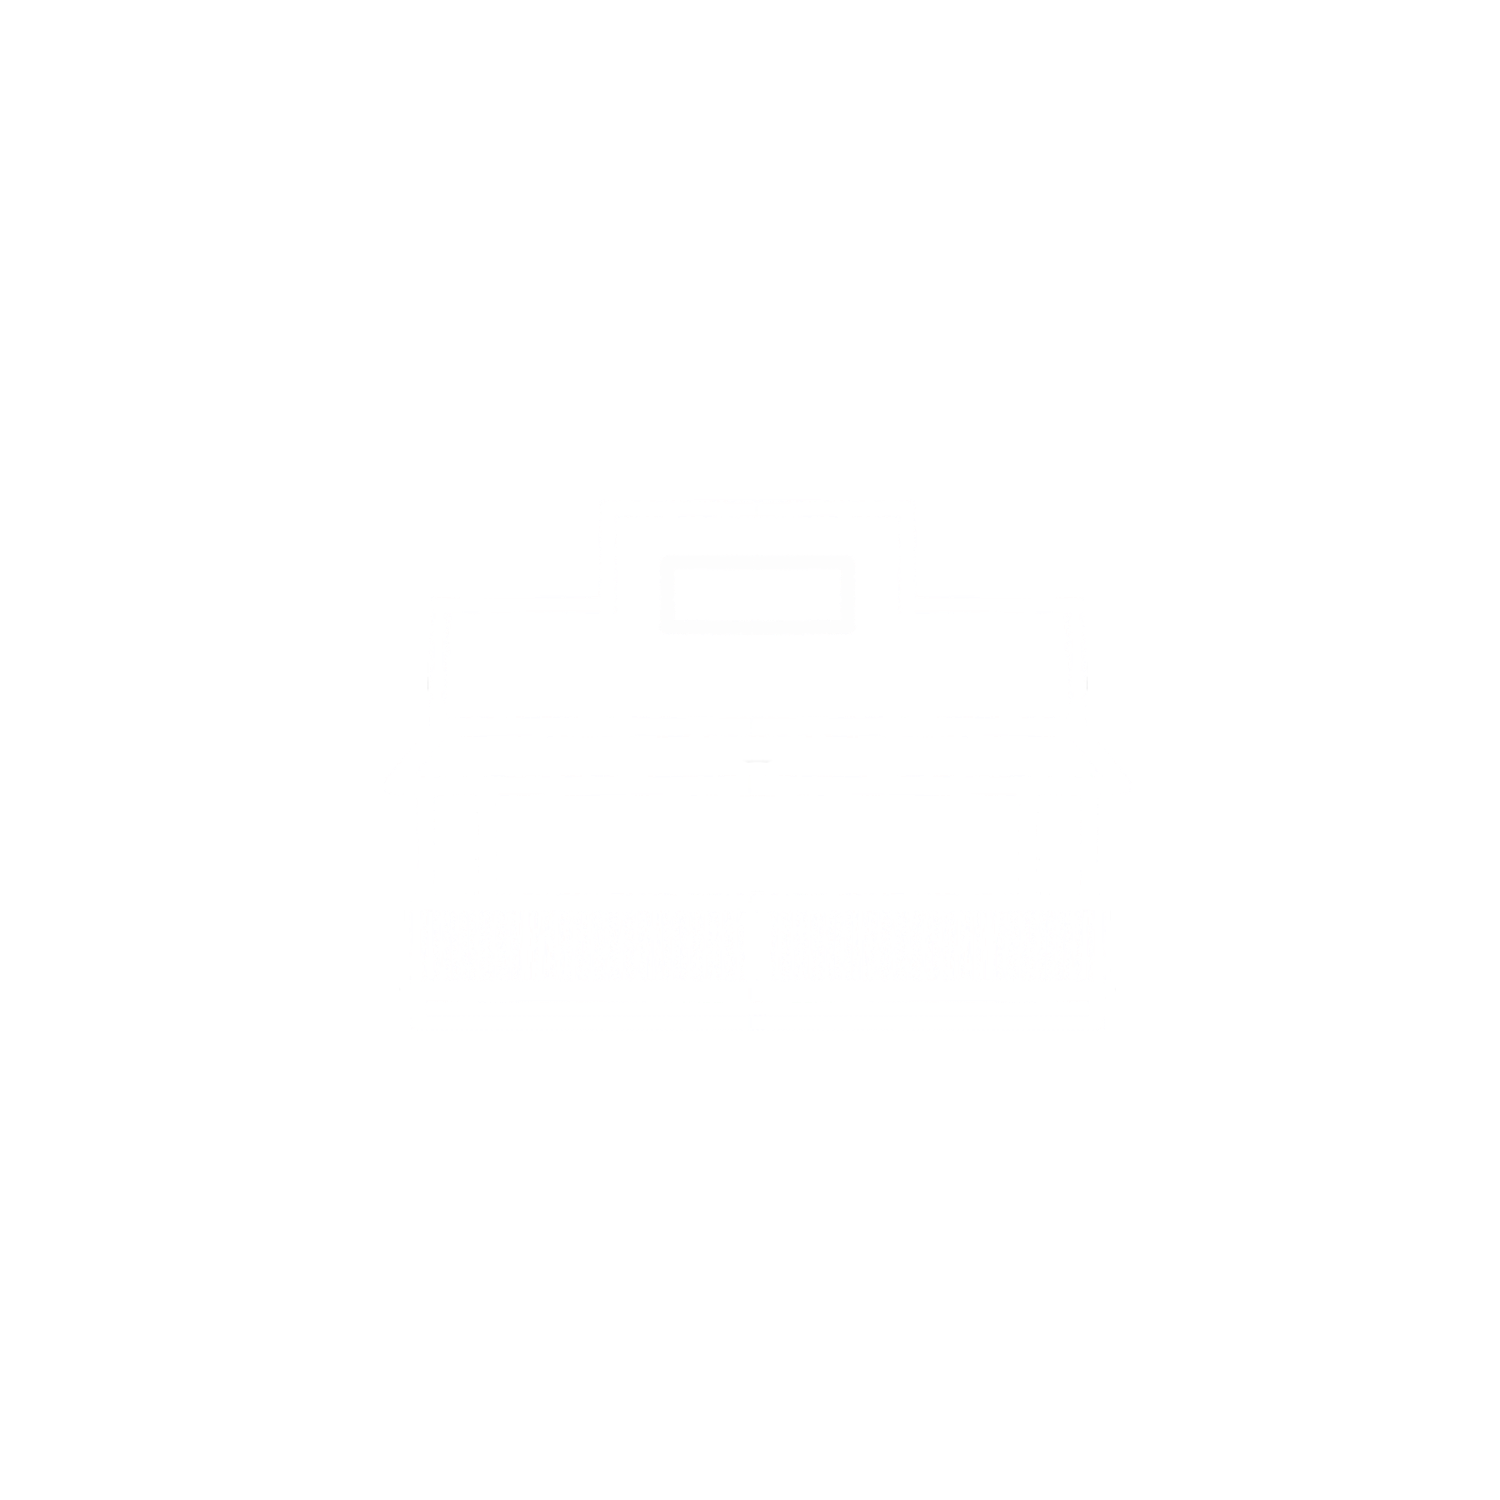 Farm to Barn